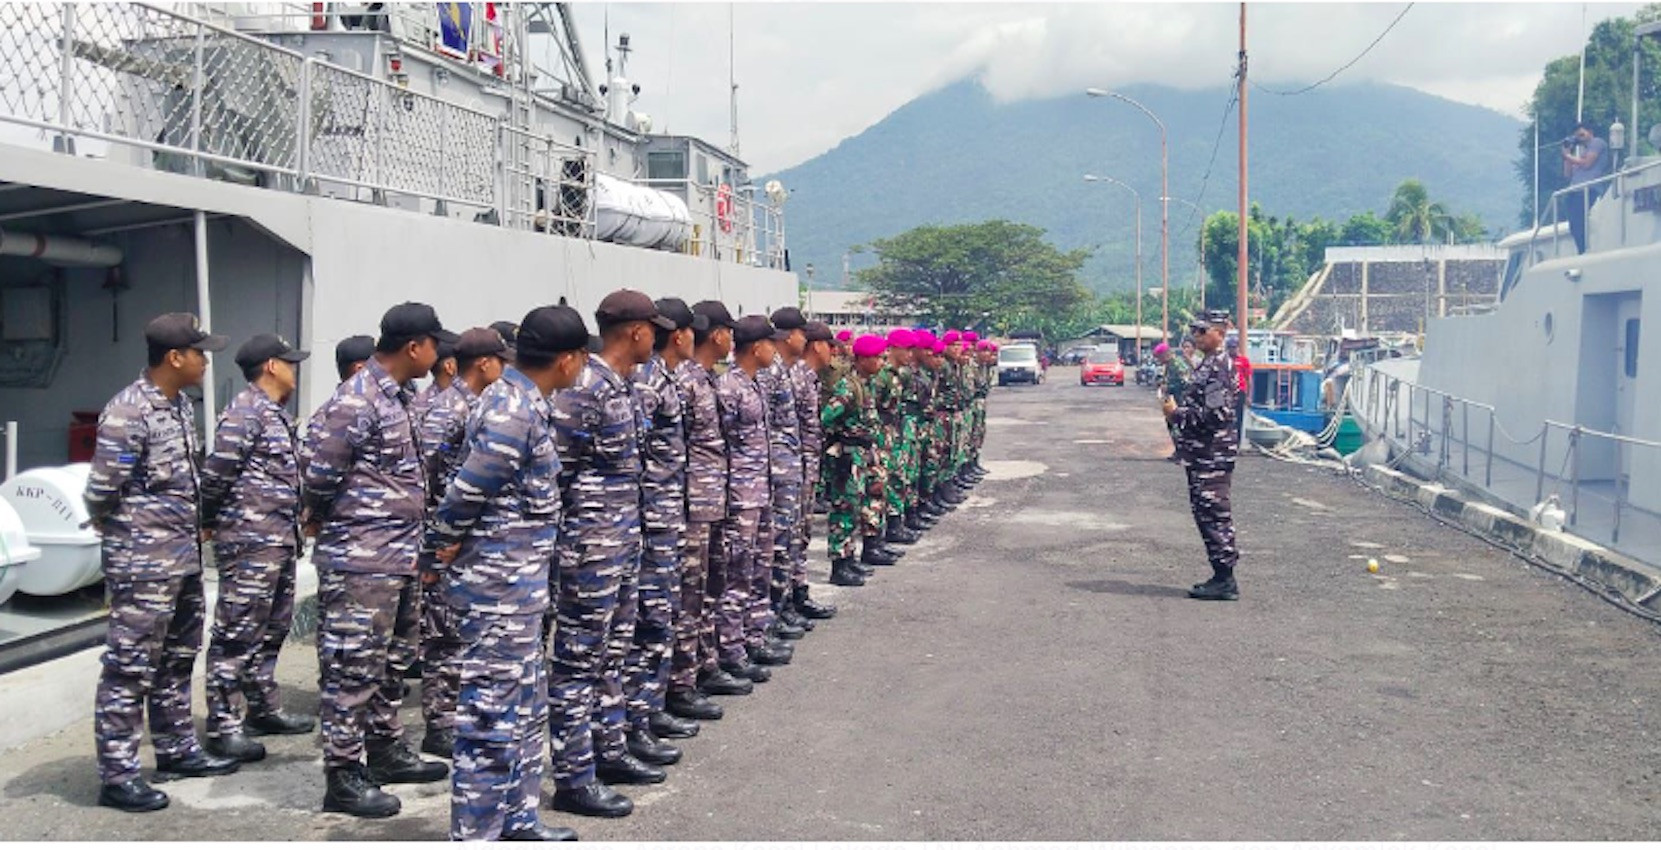 TNI AL Kerahkan Kapal Perang untuk Evakuasi Warga Terdampak Erupsi Gunung Ruang - JPNN.com